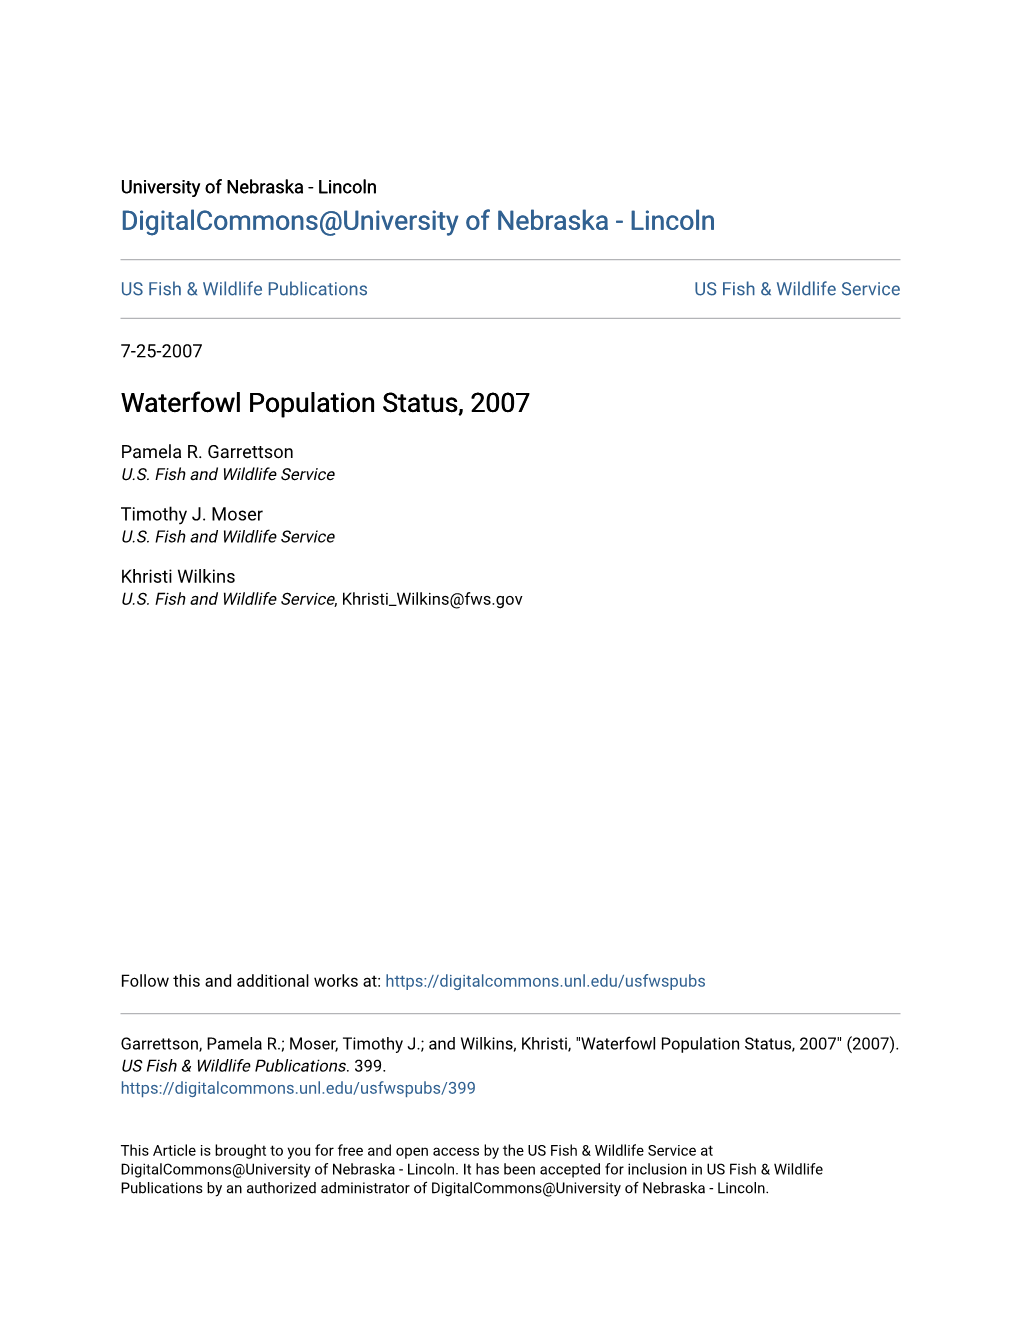 Waterfowl Population Status, 2007